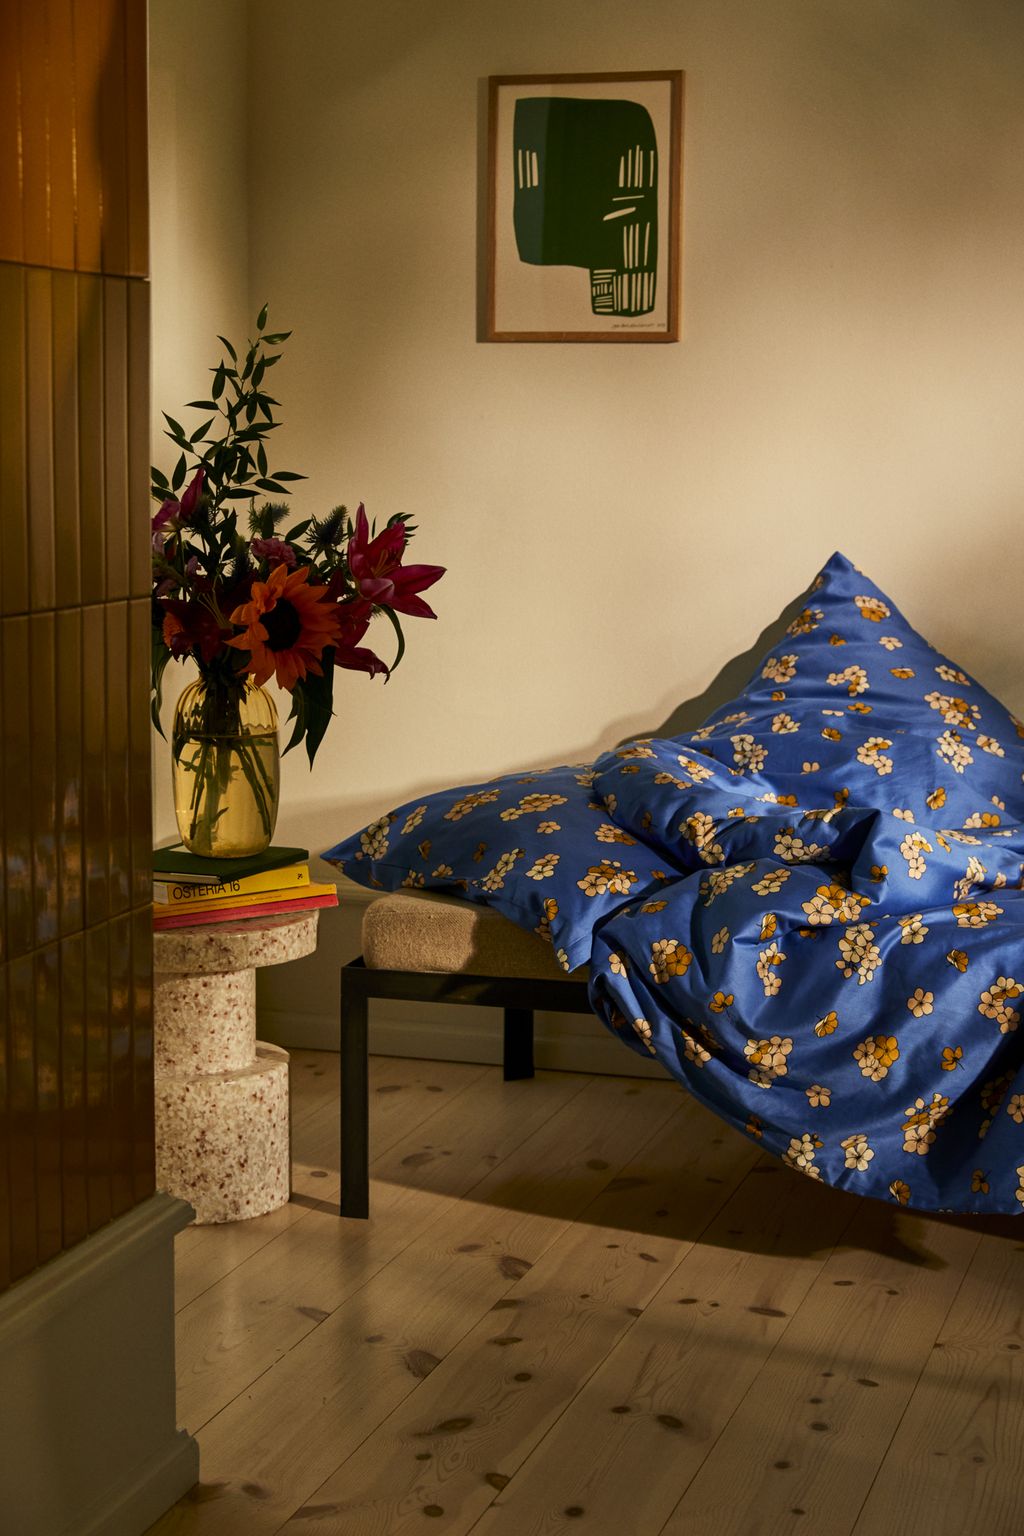 JUNA Grand behageligt sengelinned 140 x200 cm, blå